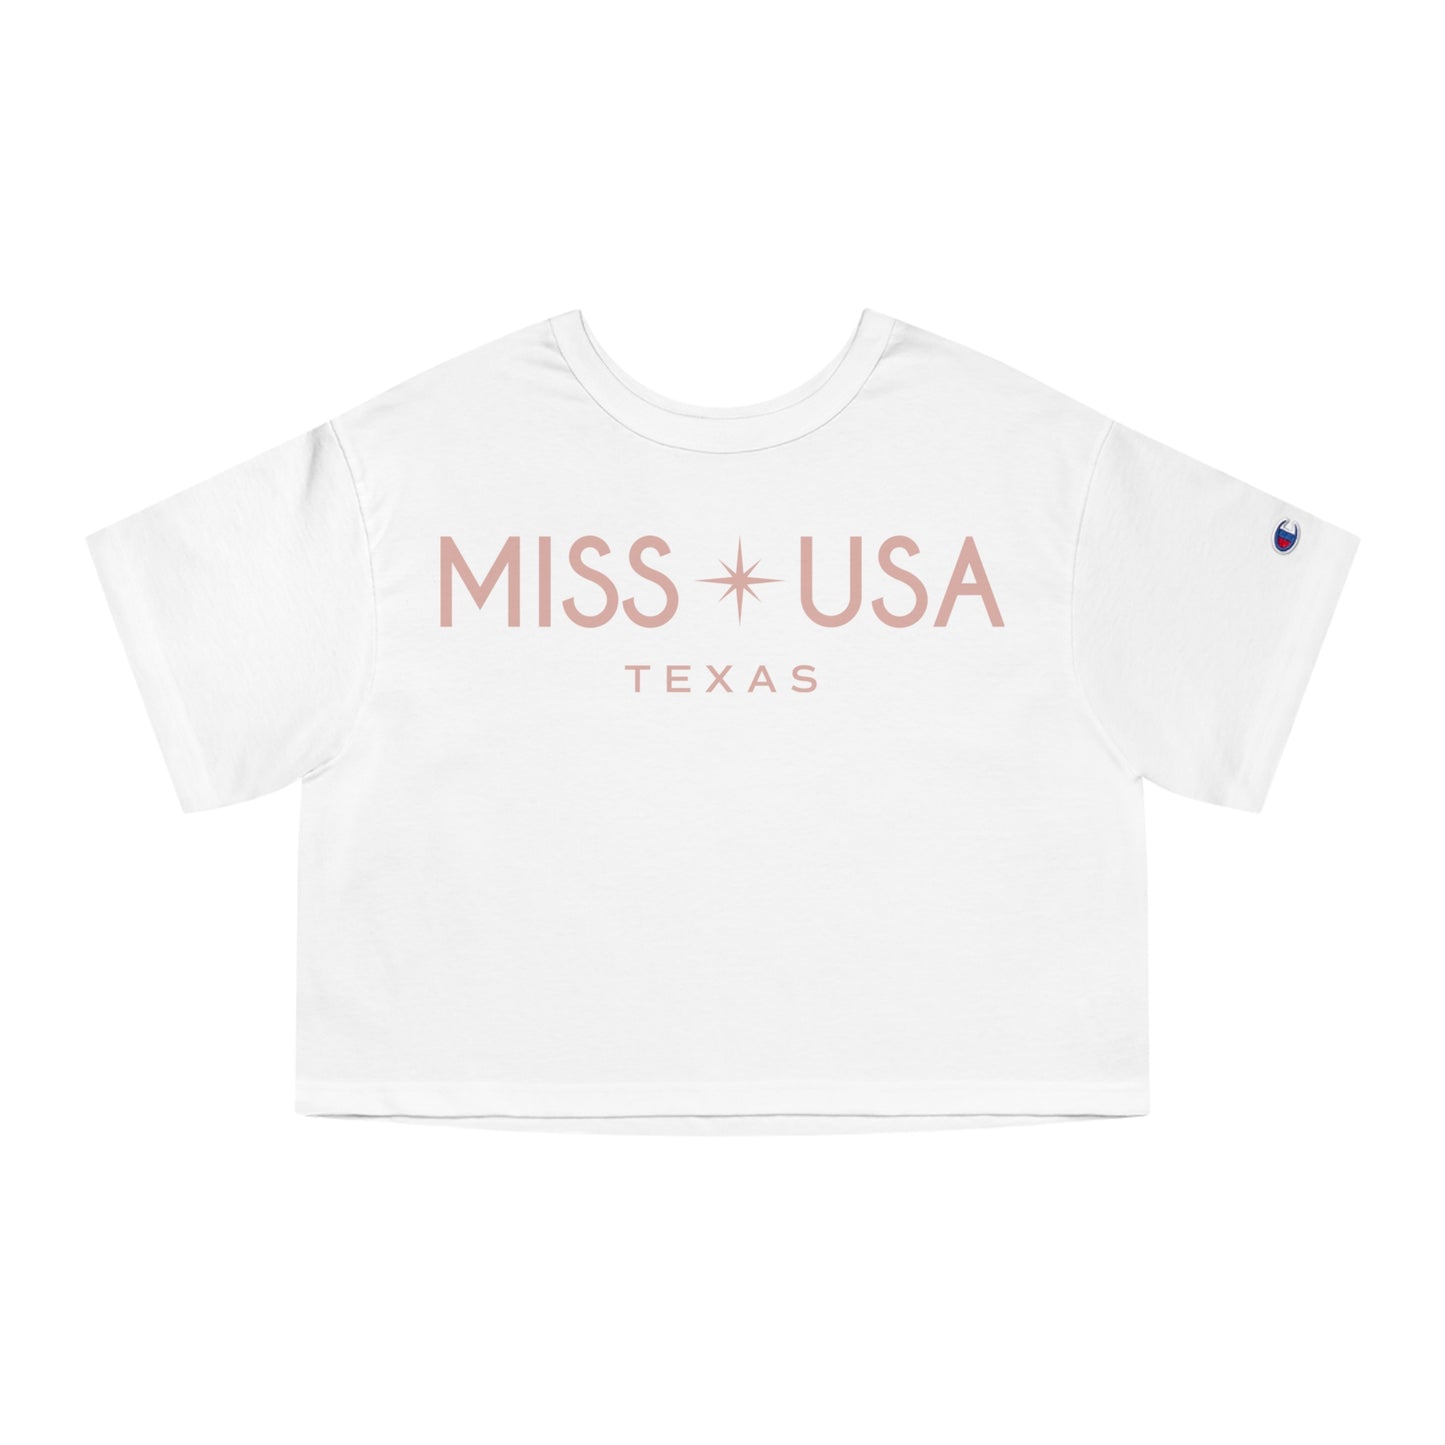 Single Logo T-shirt - Miss Texas USA (cropped)